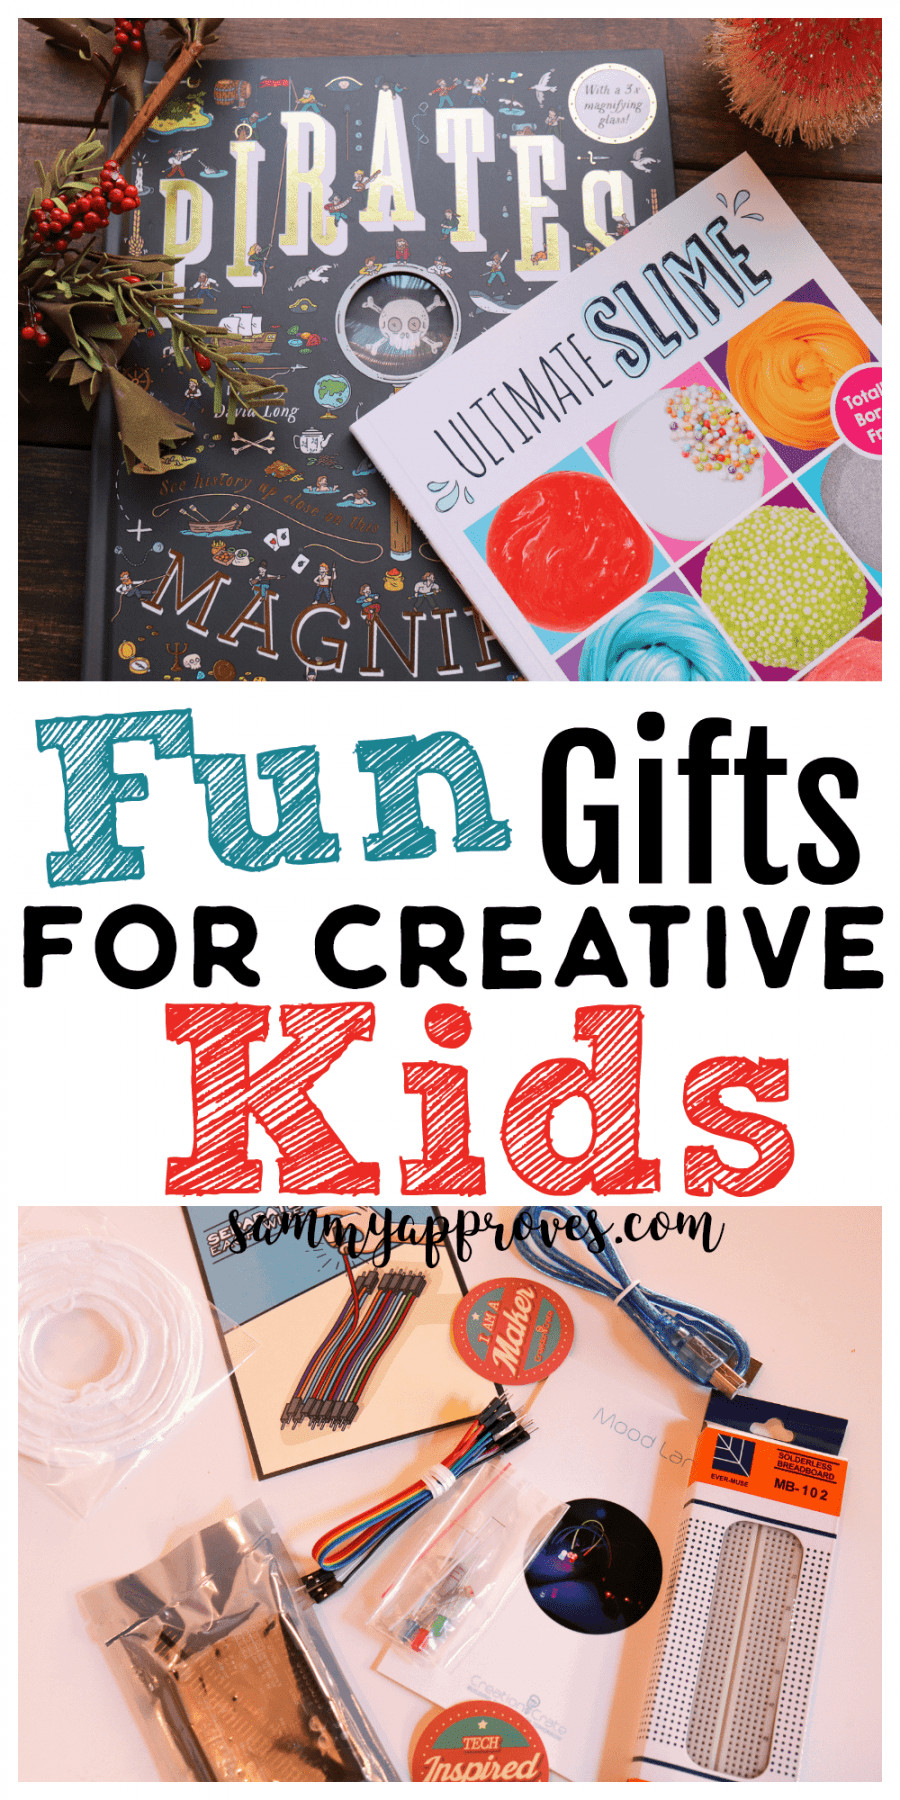 Fun Gifts For Kids
 Fun Gifts for Creative Kids